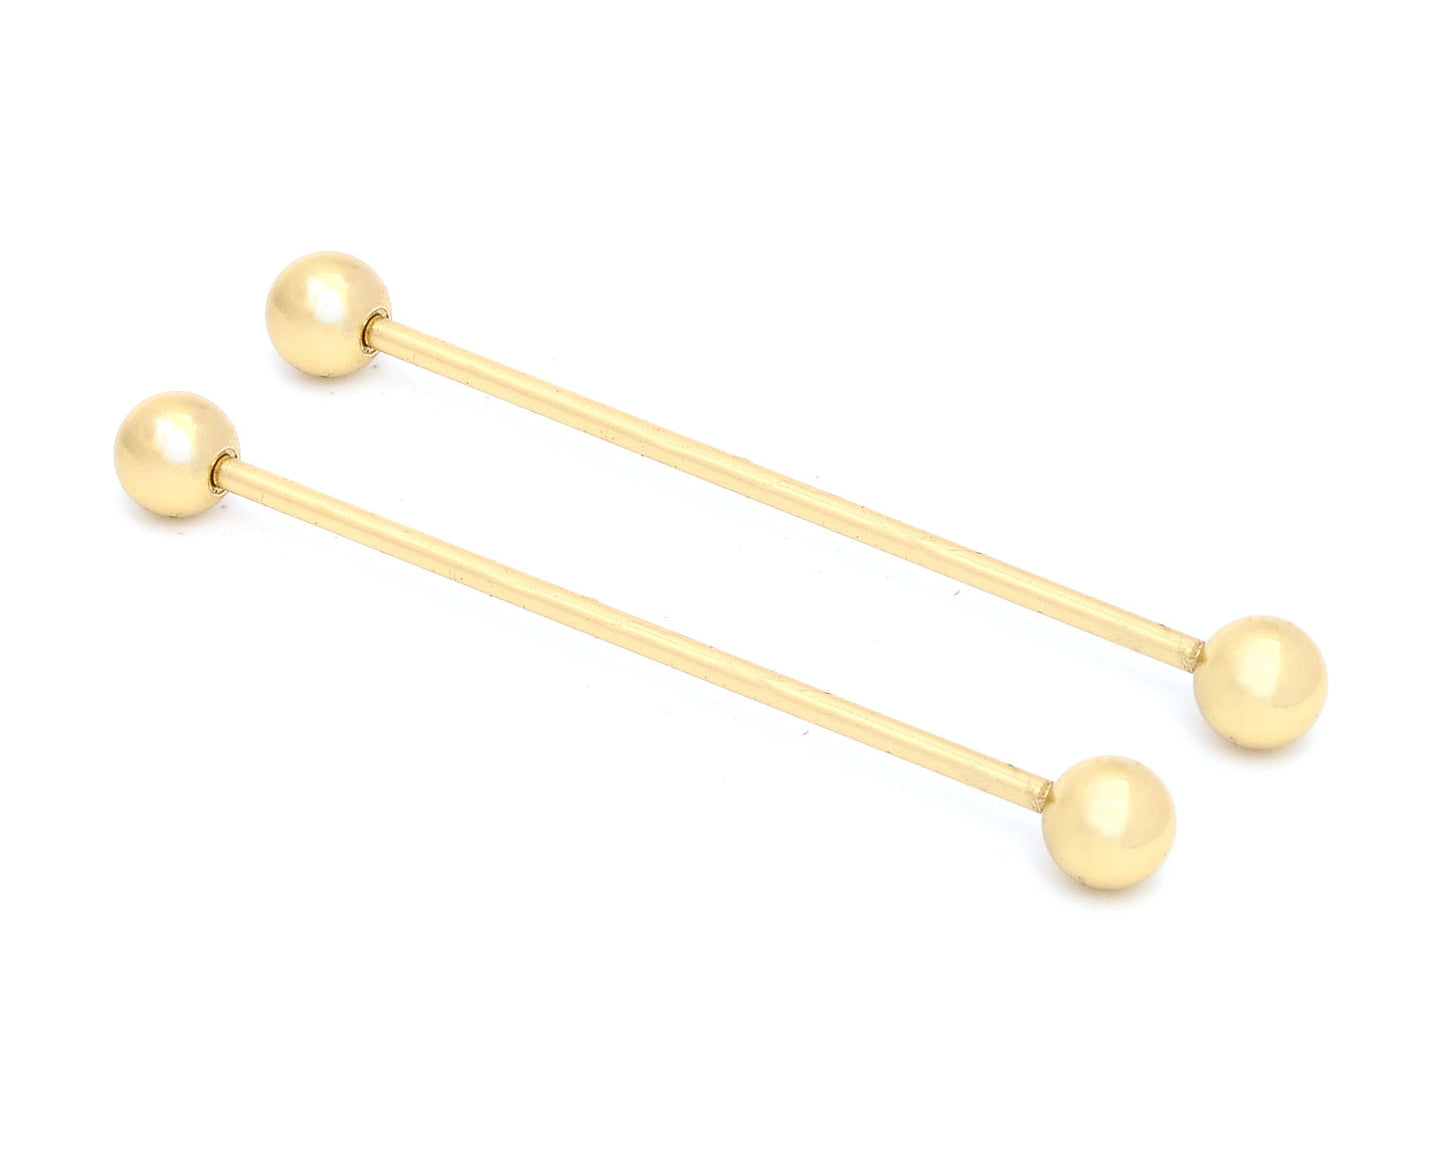 1 Yellow Stainless Steel Internally Threaded Industrial Barbell Ear Piercing Body Piercing Jewelry